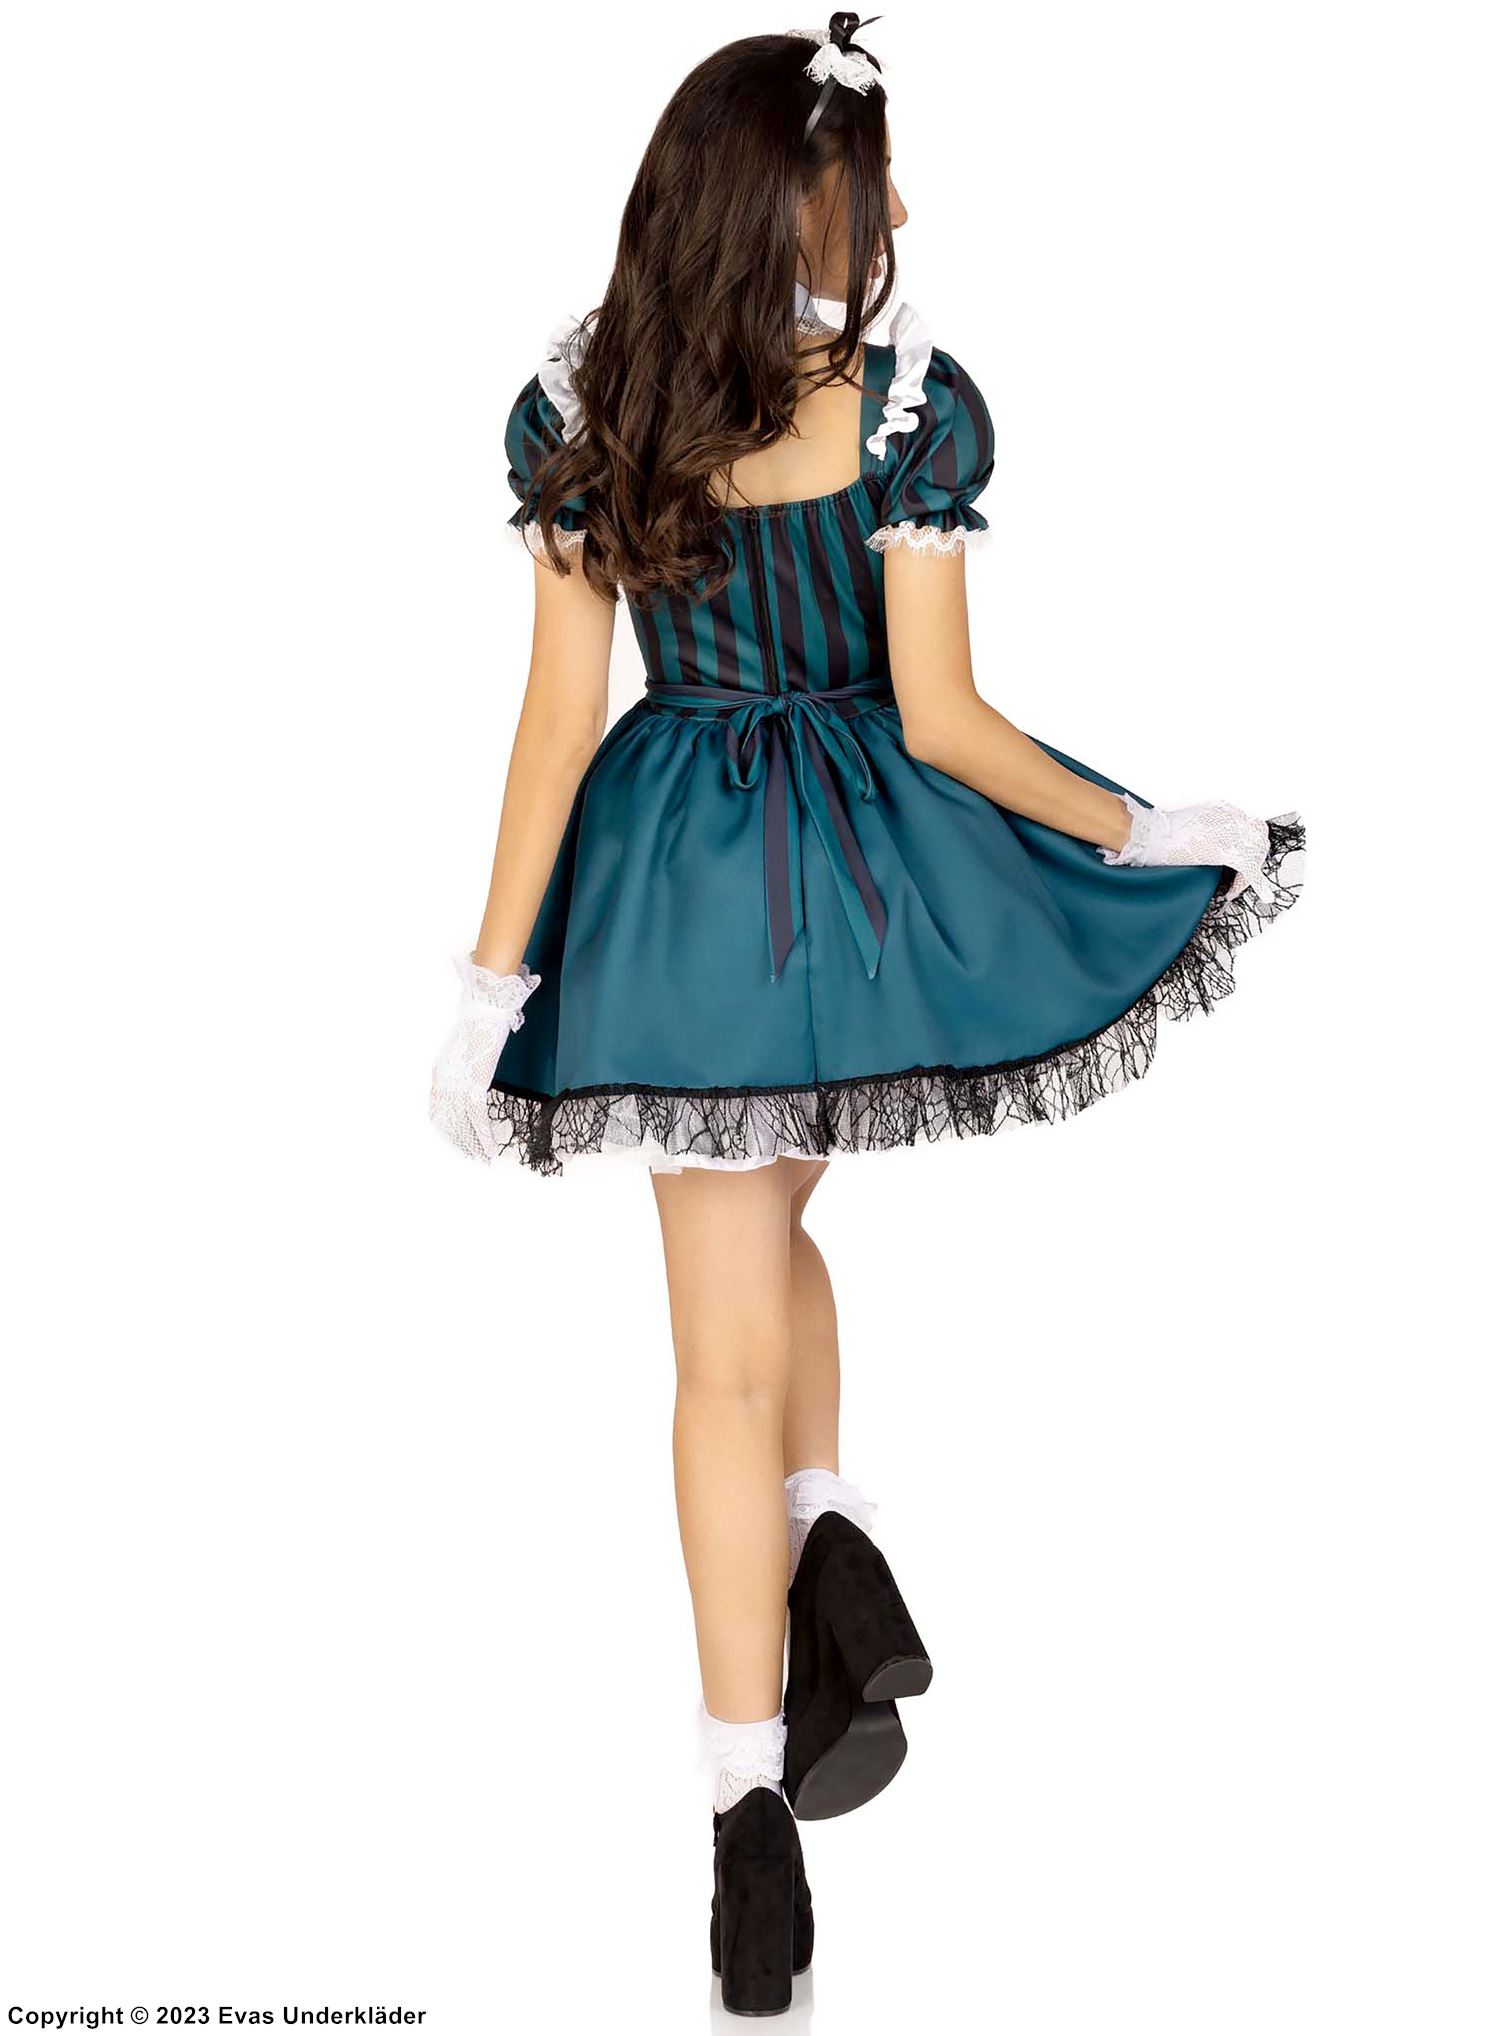 French maid, costume dress, ruffle trim, puff sleeves, stripes